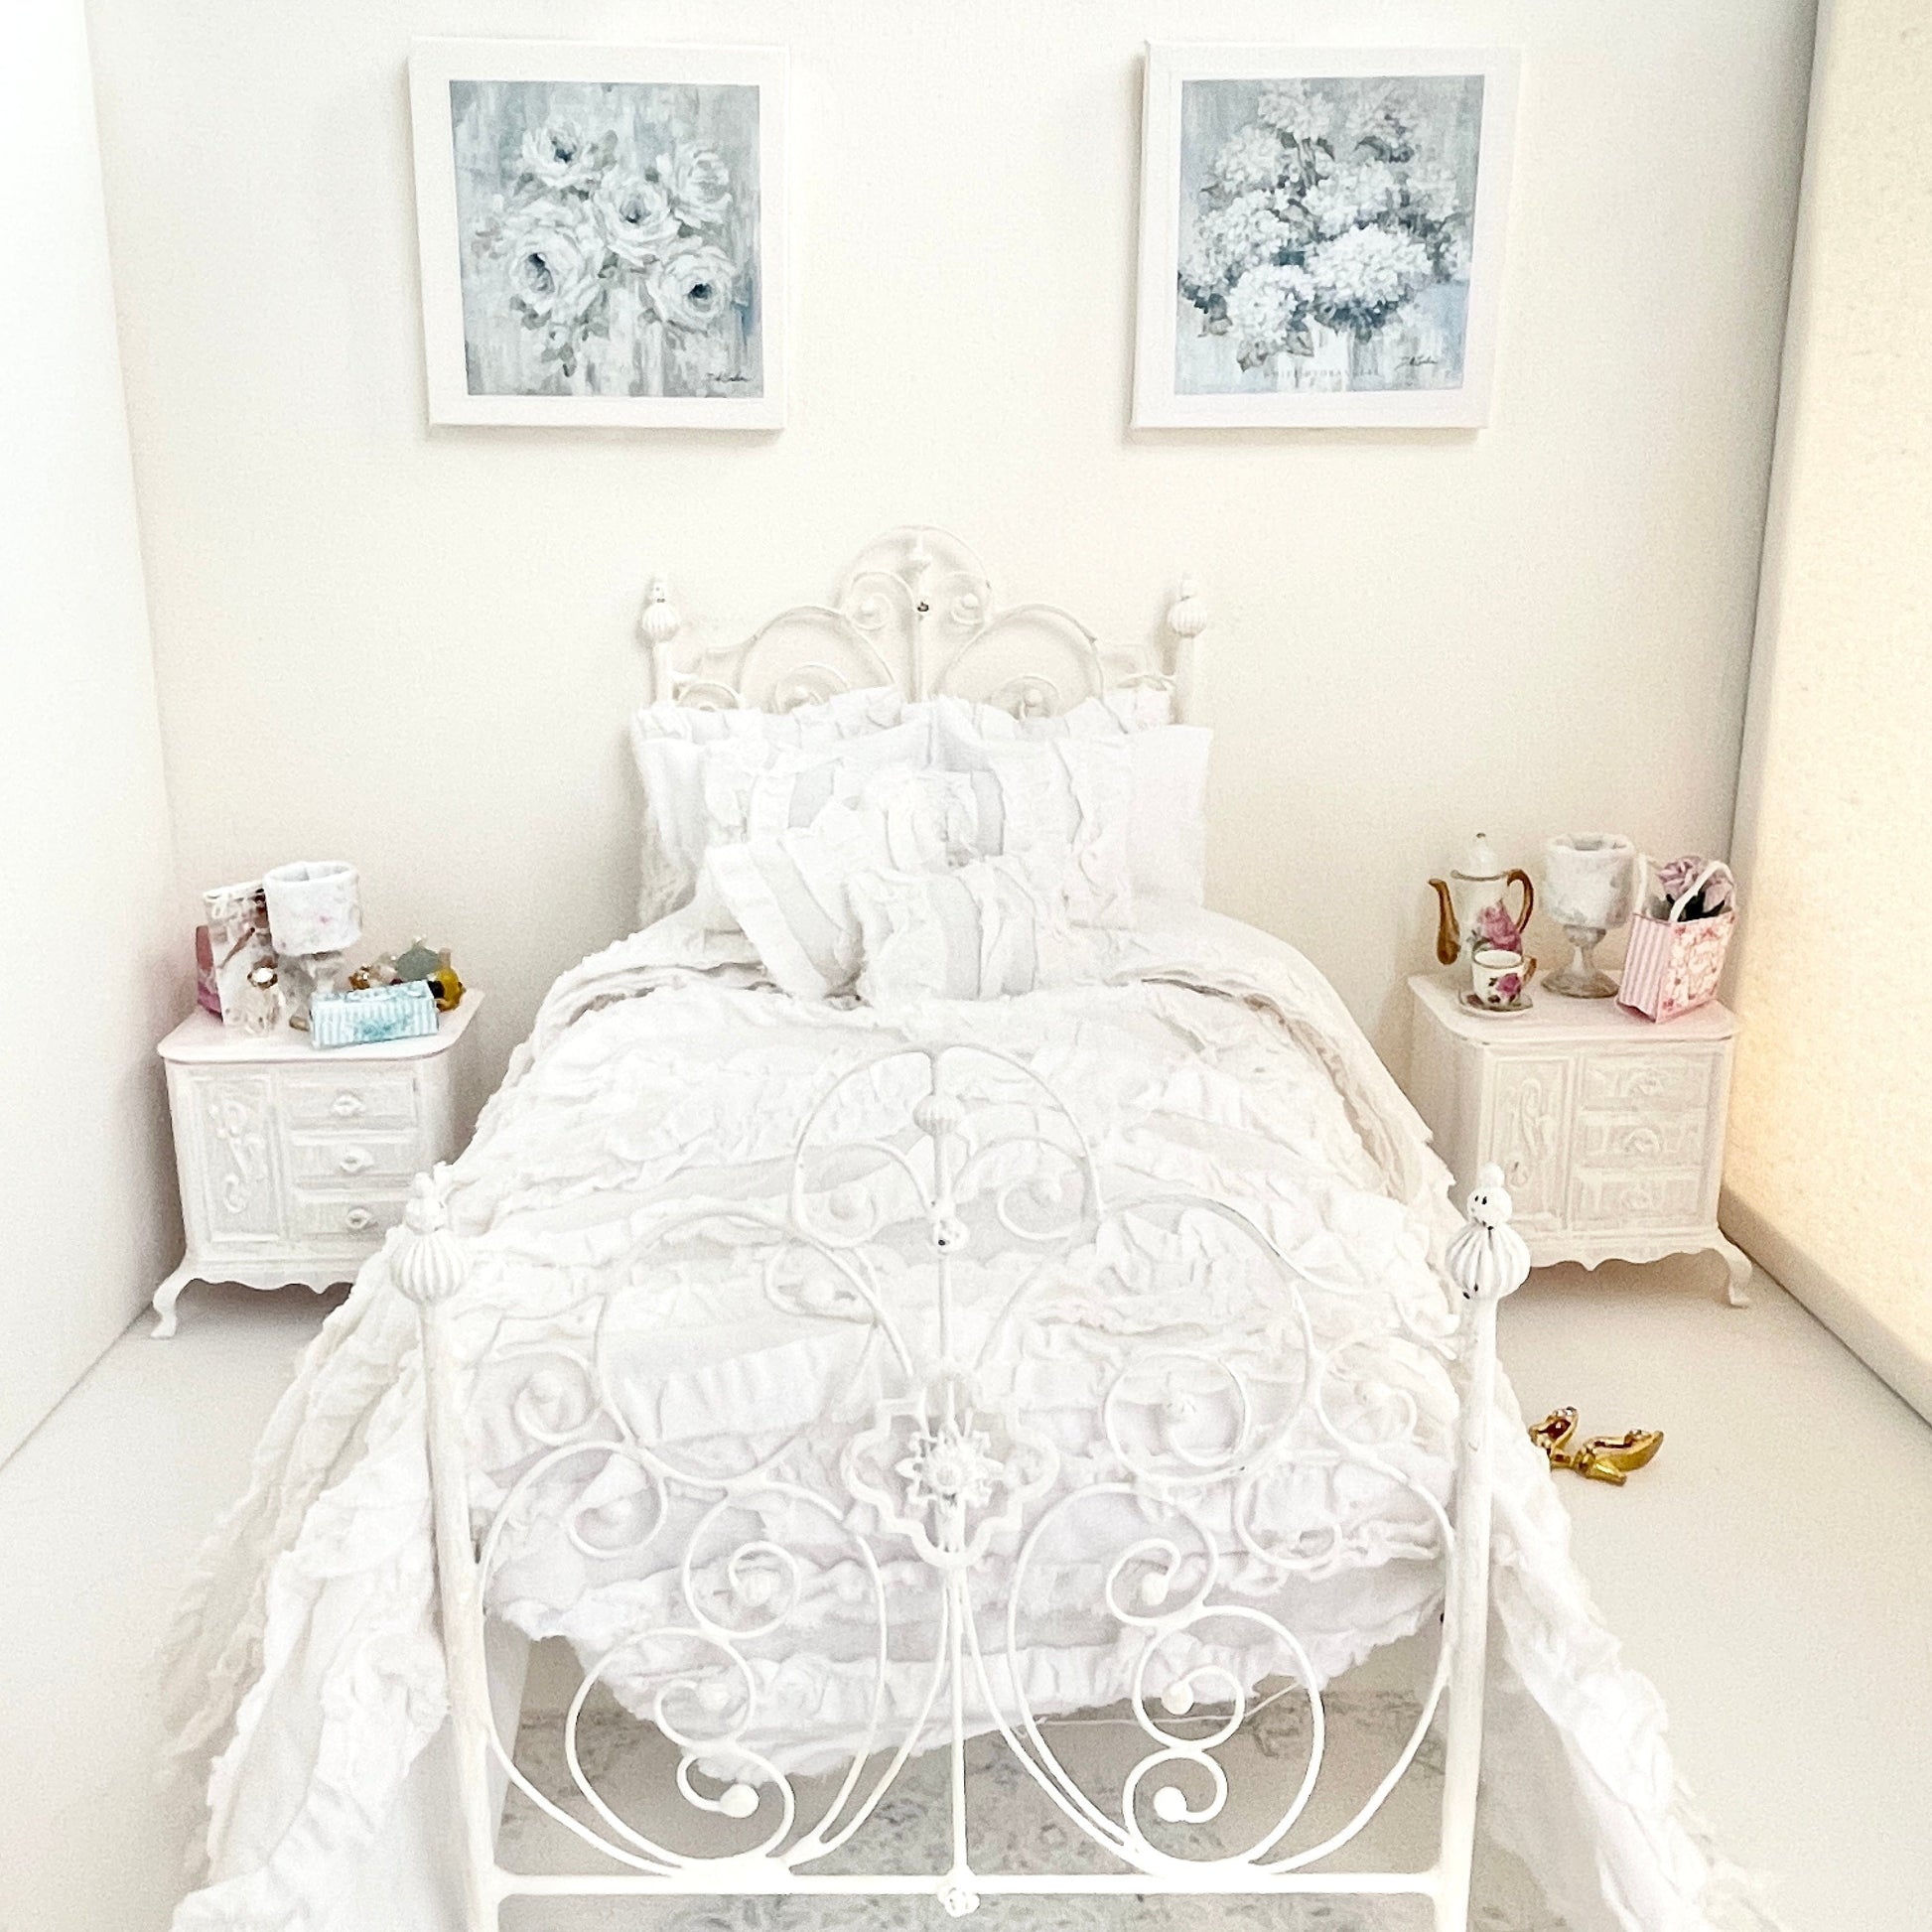 Chantallena fashion doll bedding 1:6 Scale |White Distressed Ruffled Cotton Bedding Set | Julia